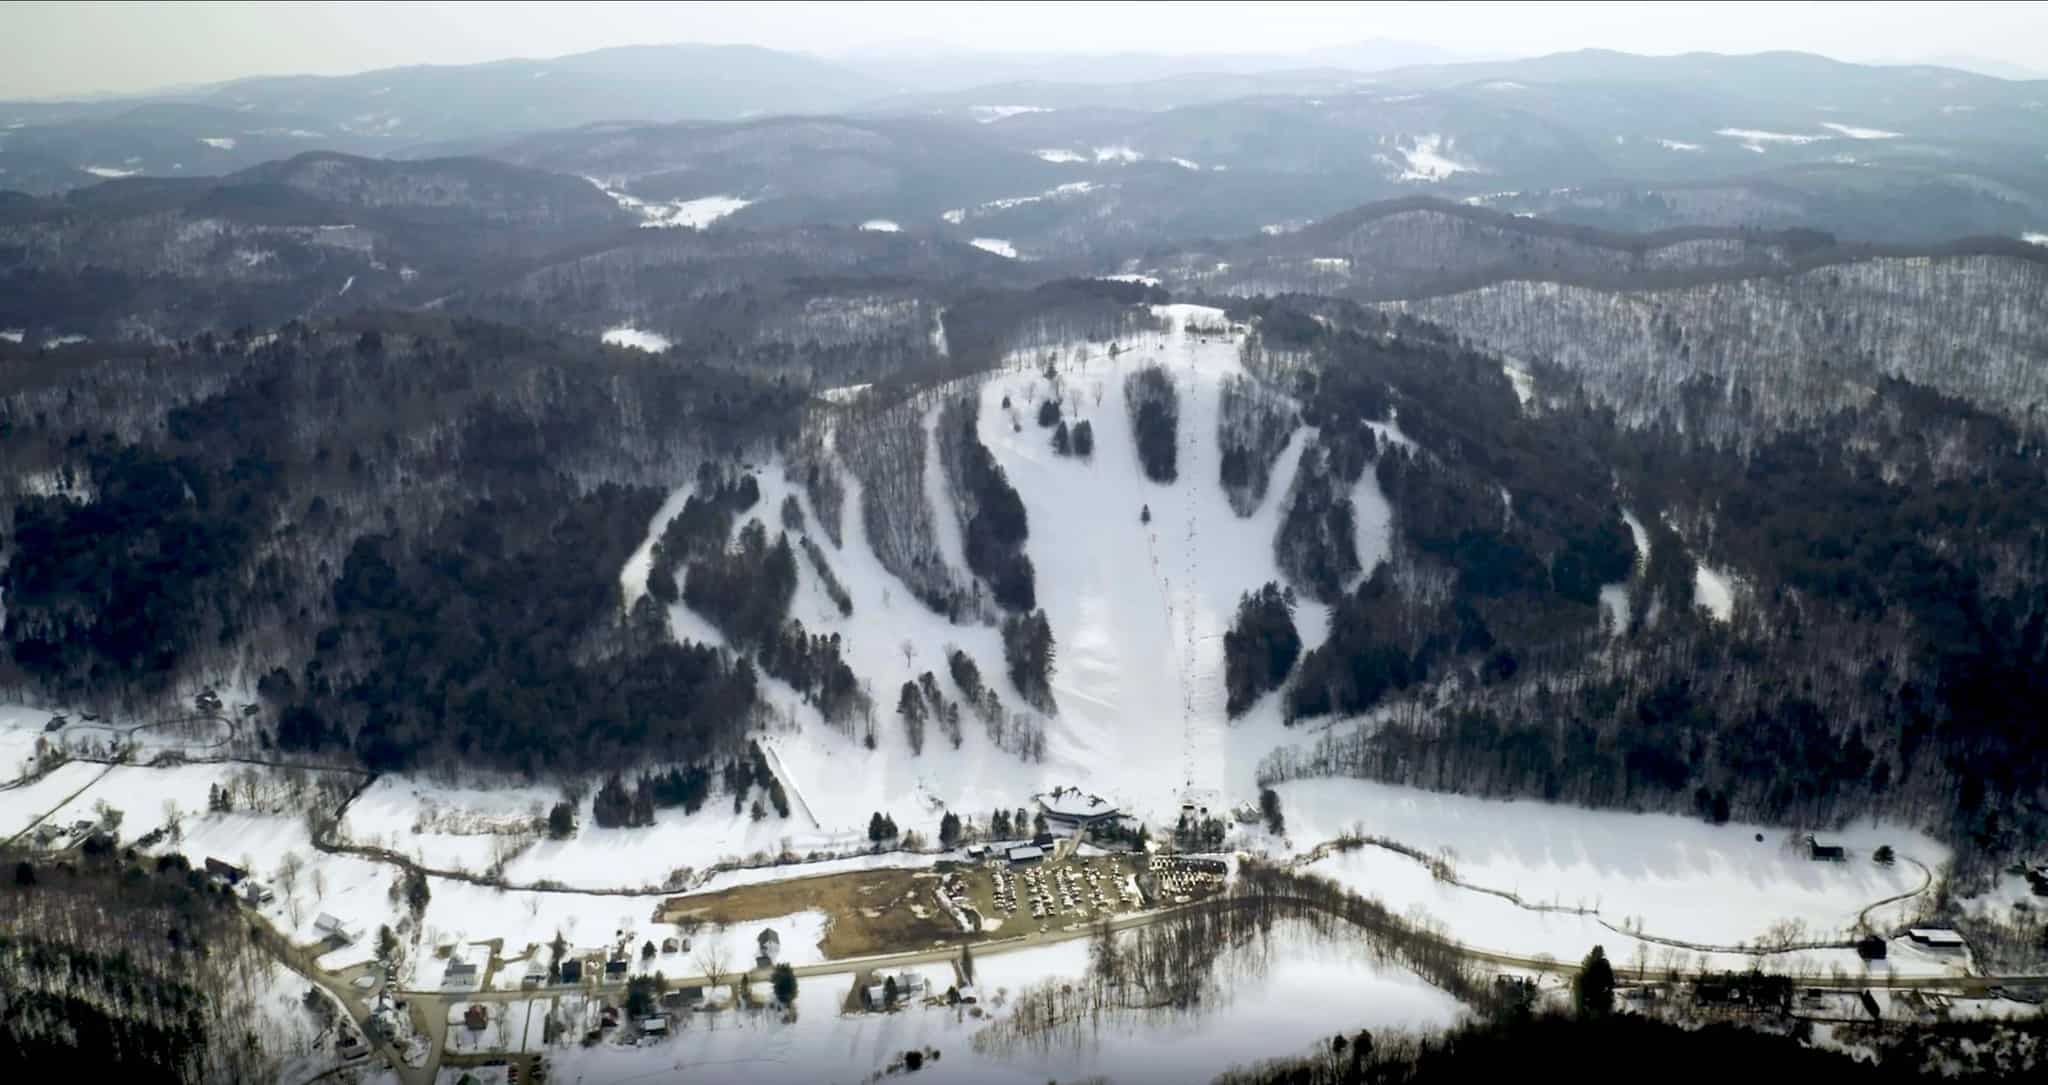 Saskadena Six - Winter Aerial View